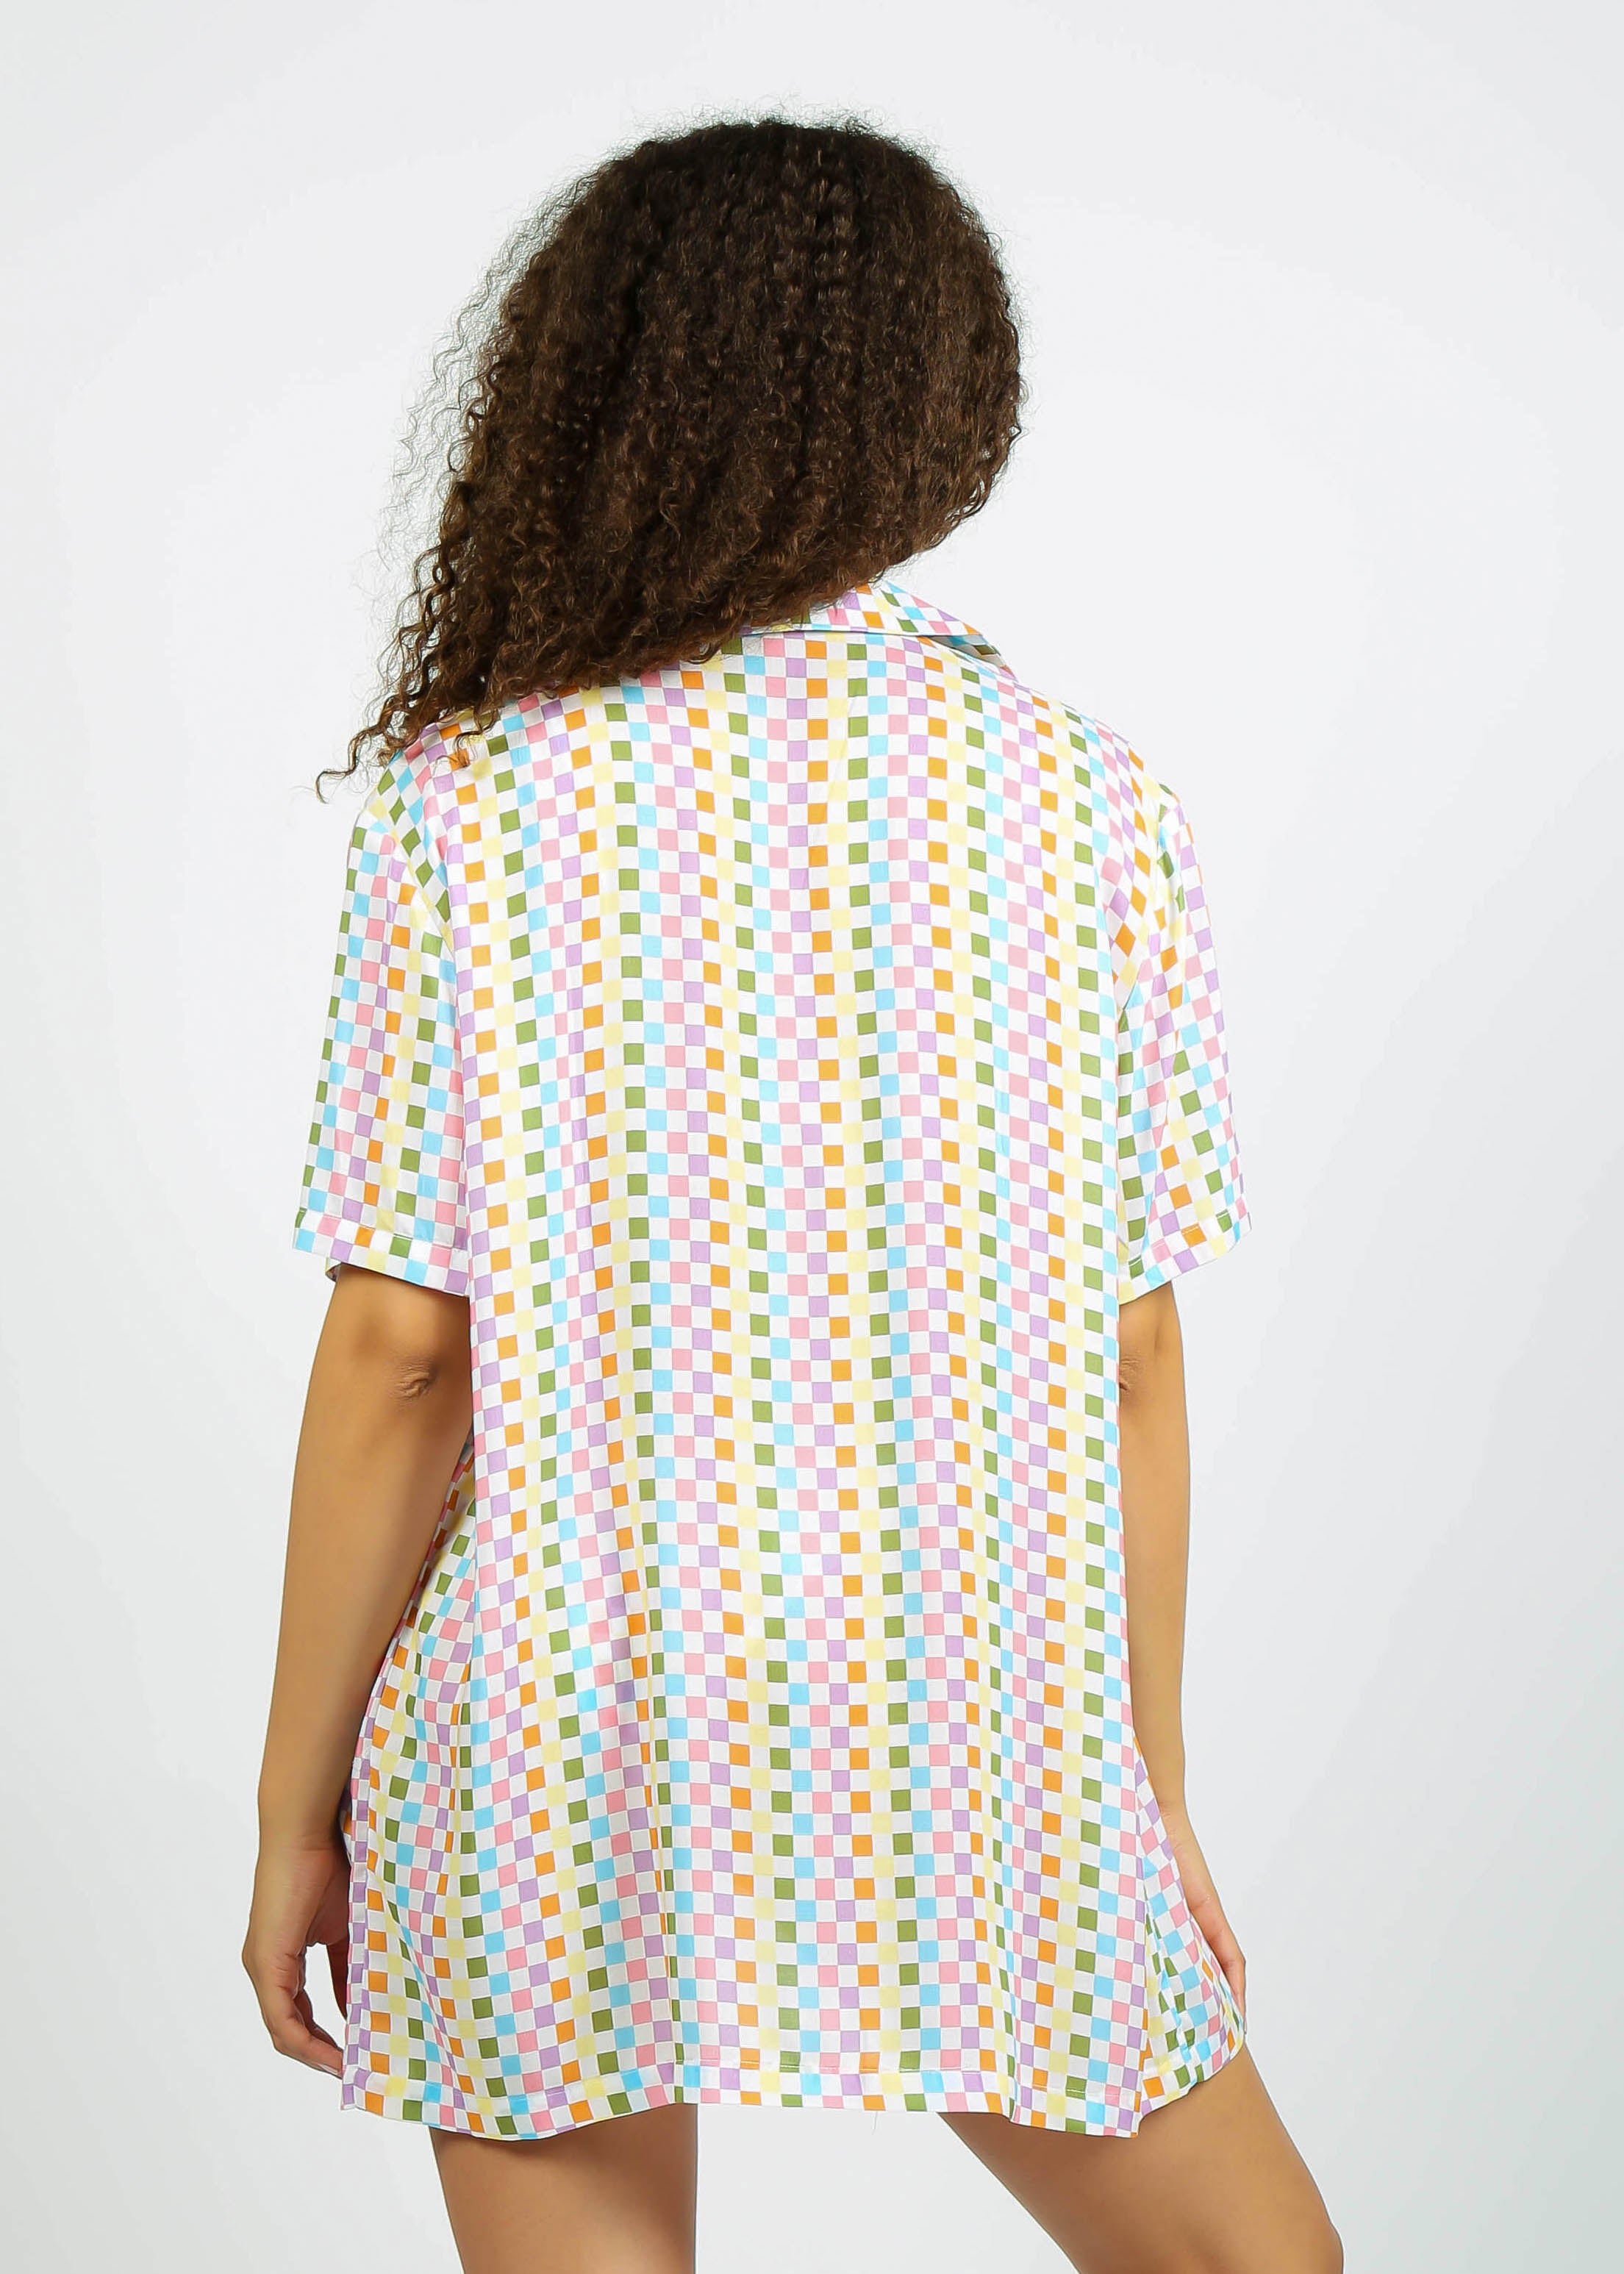 Fiji Shirt - Rainbow Check